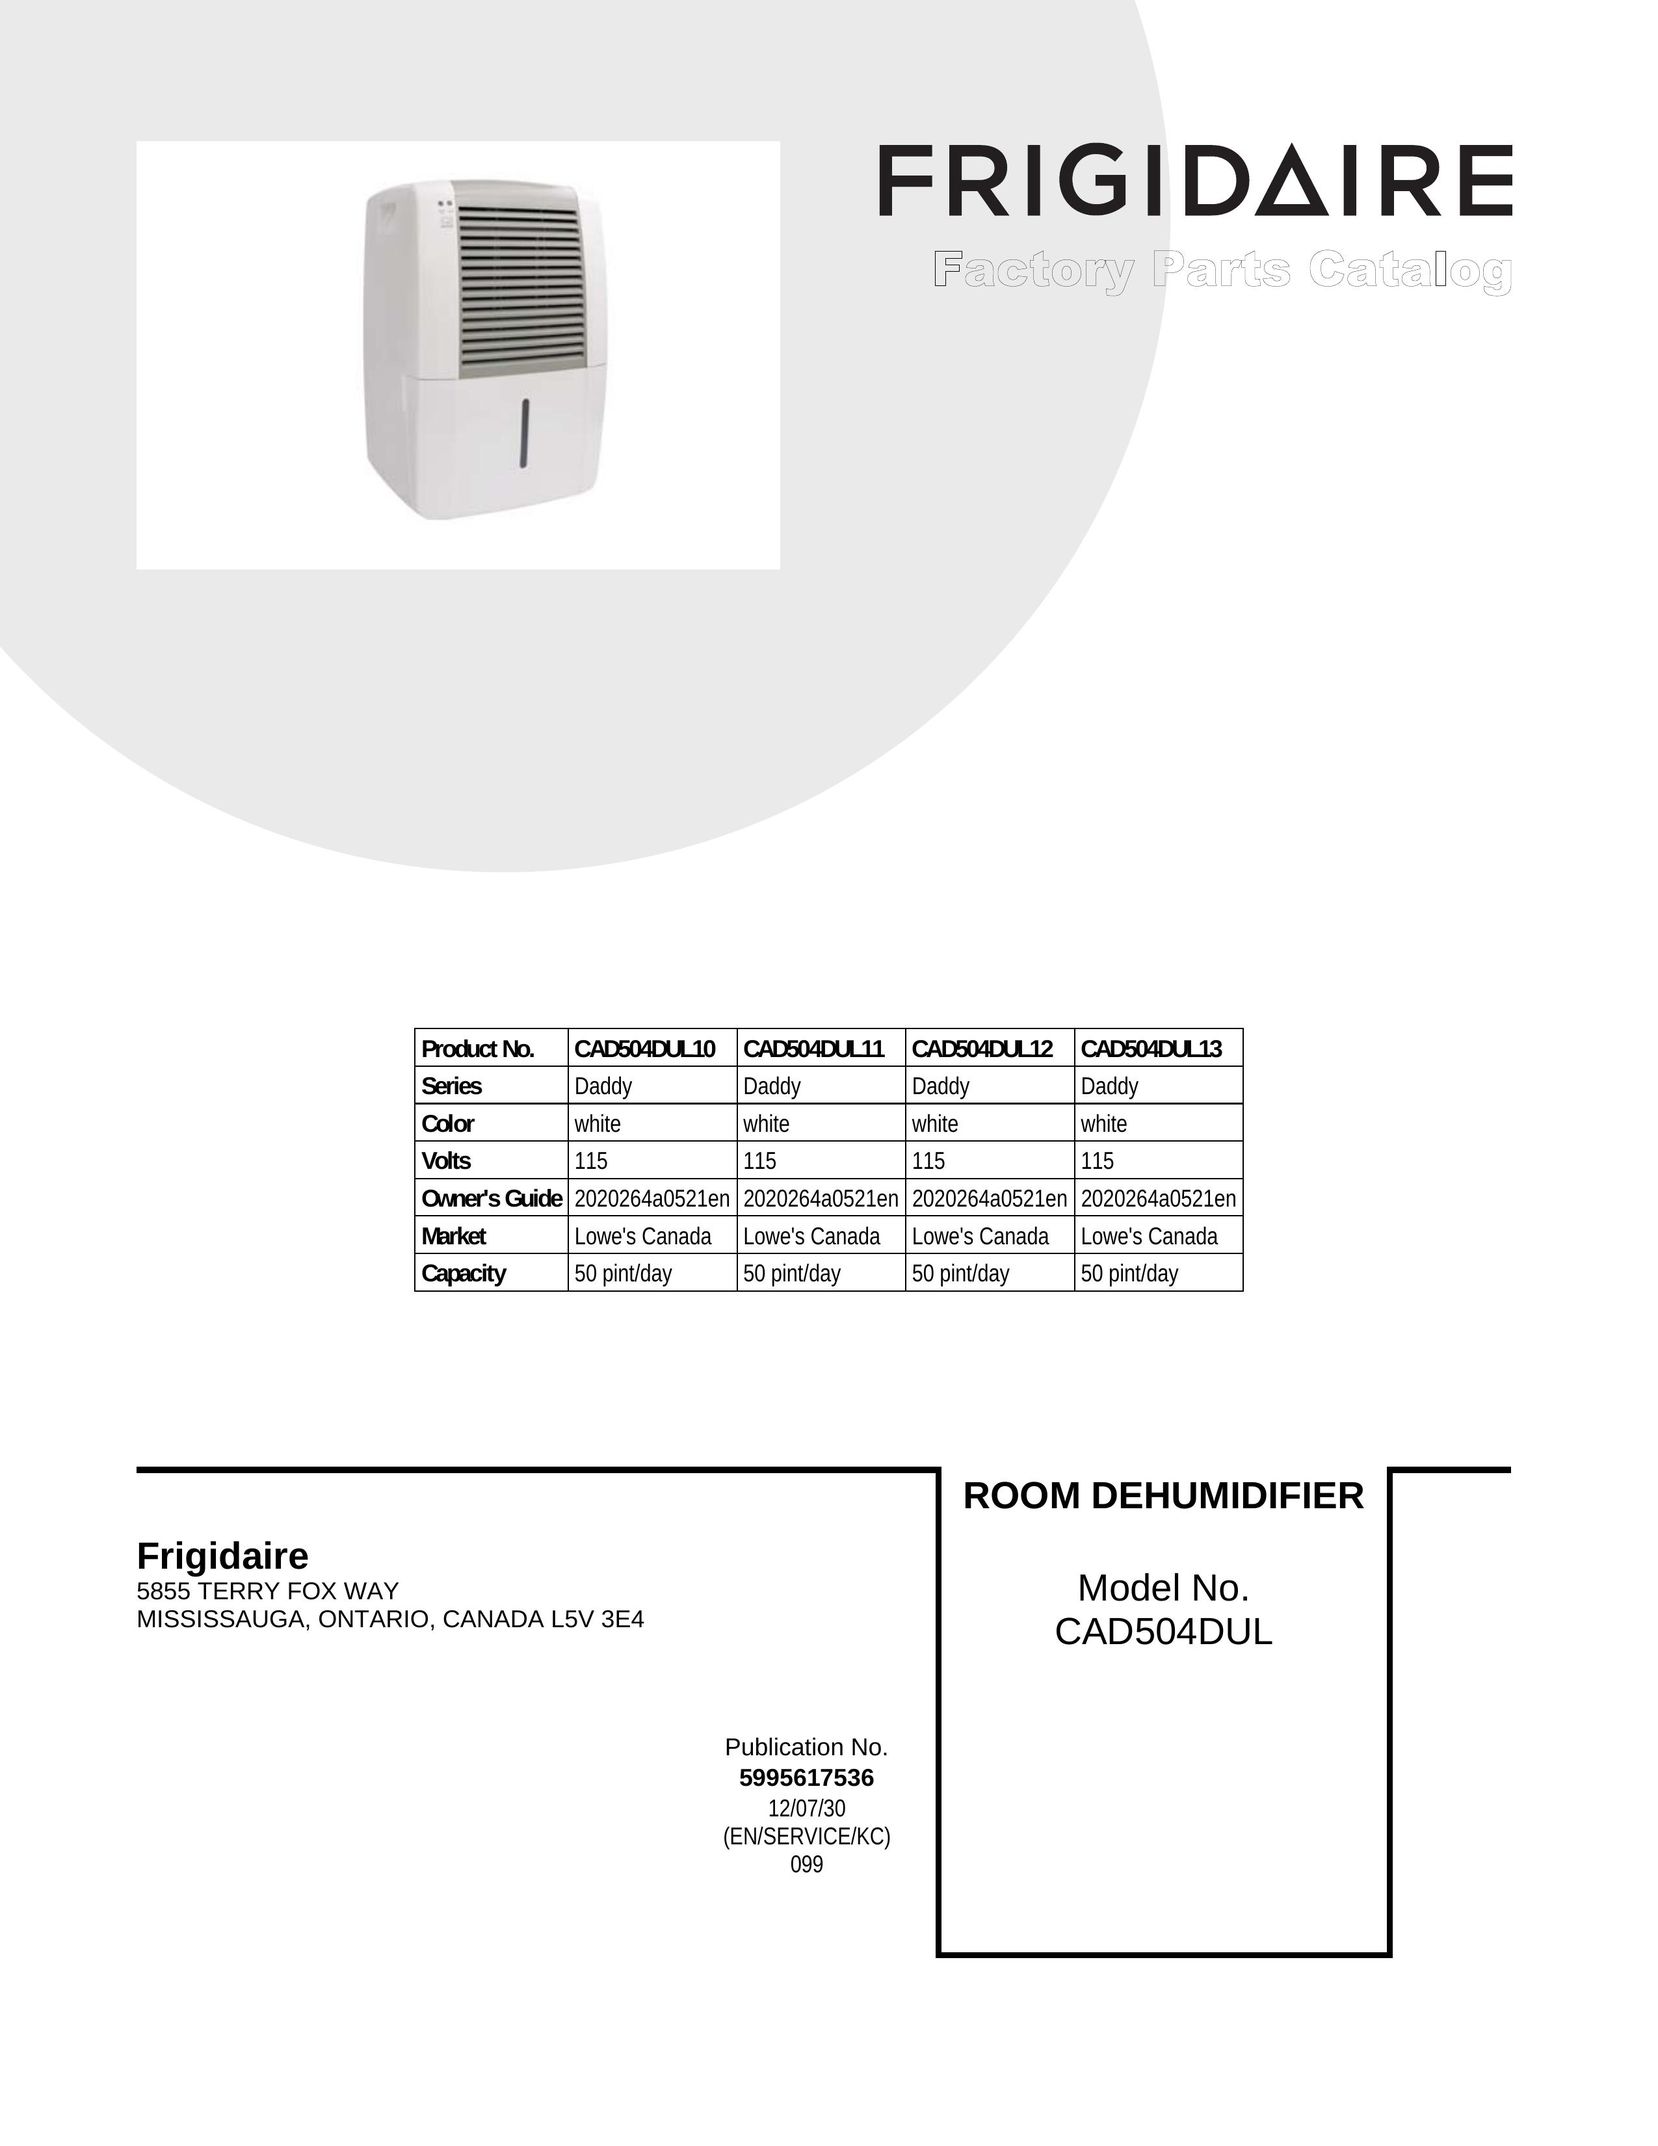 Frigidaire CAD504DUL13 Dehumidifier User Manual